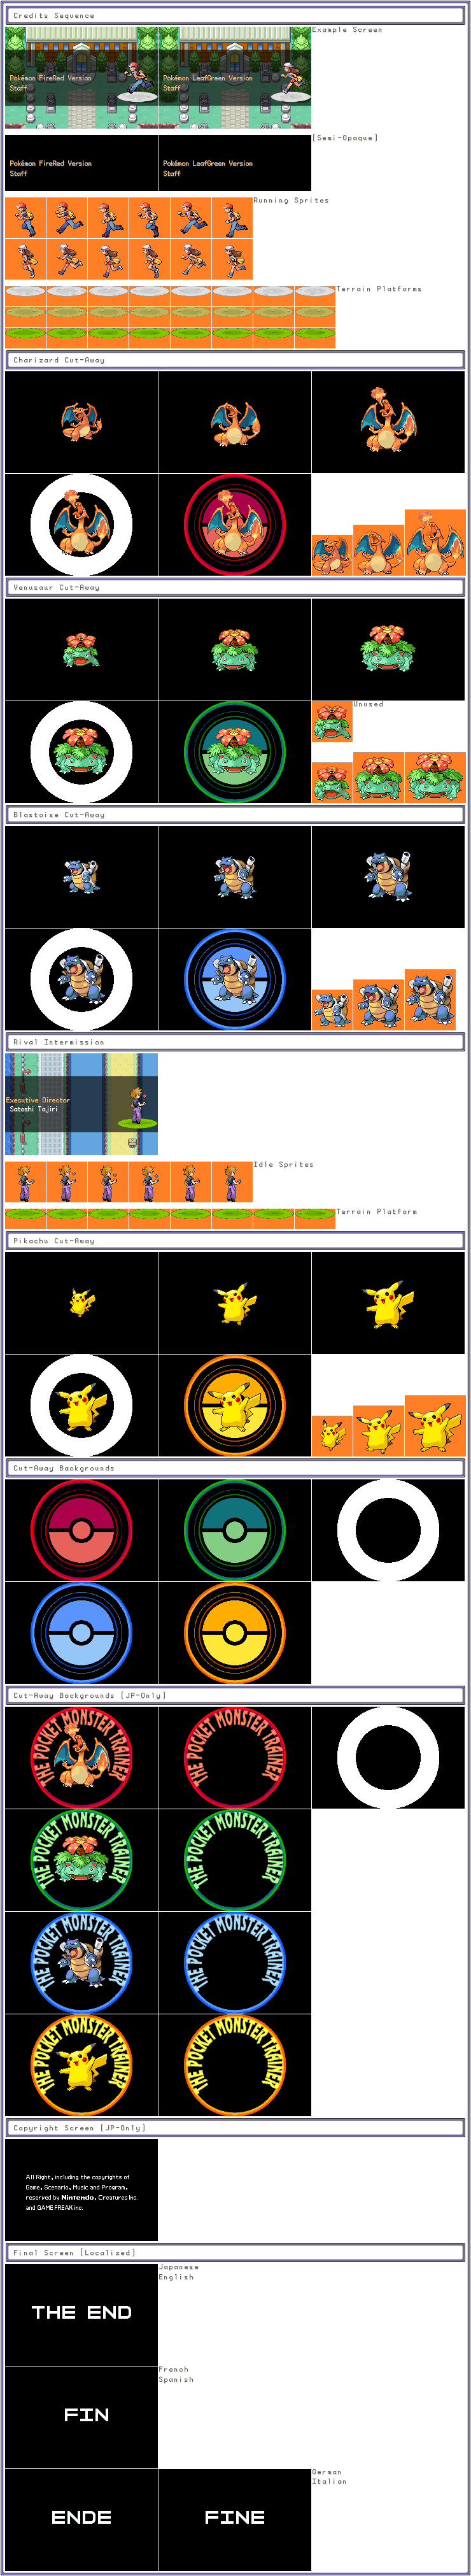 Pokémon FireRed / LeafGreen - Credits Sequence